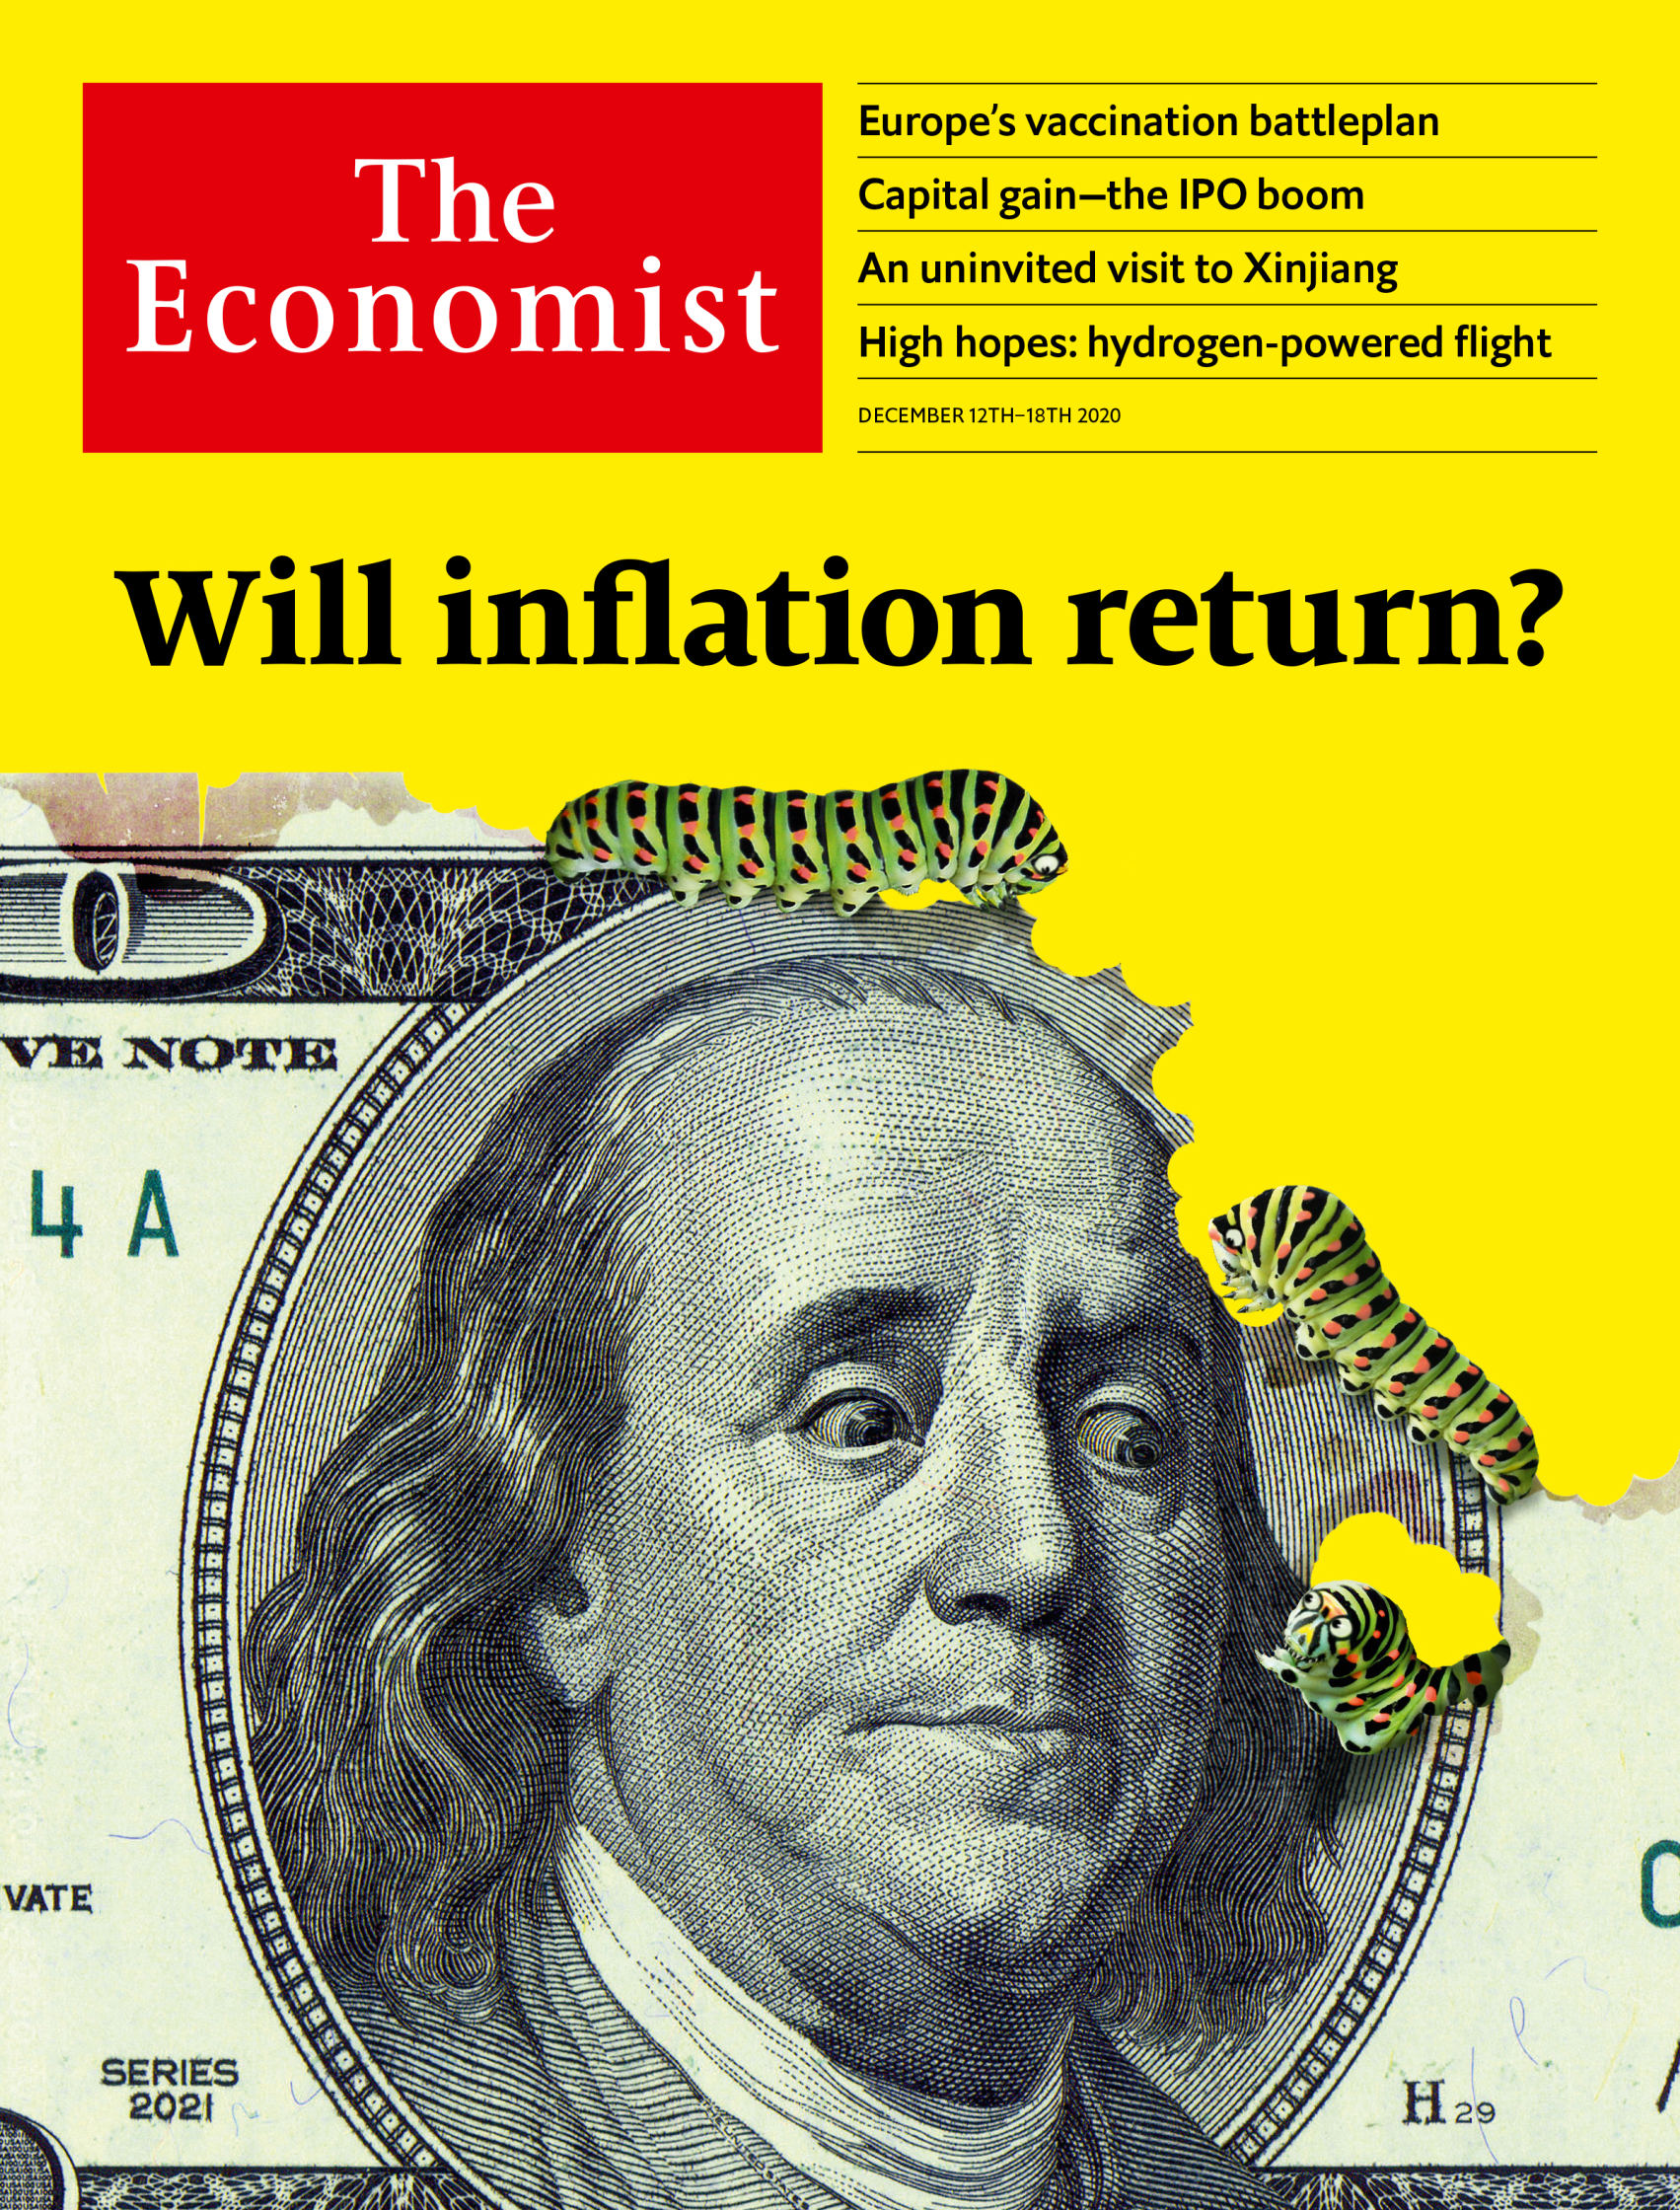 InflationCaterpillars.jpg